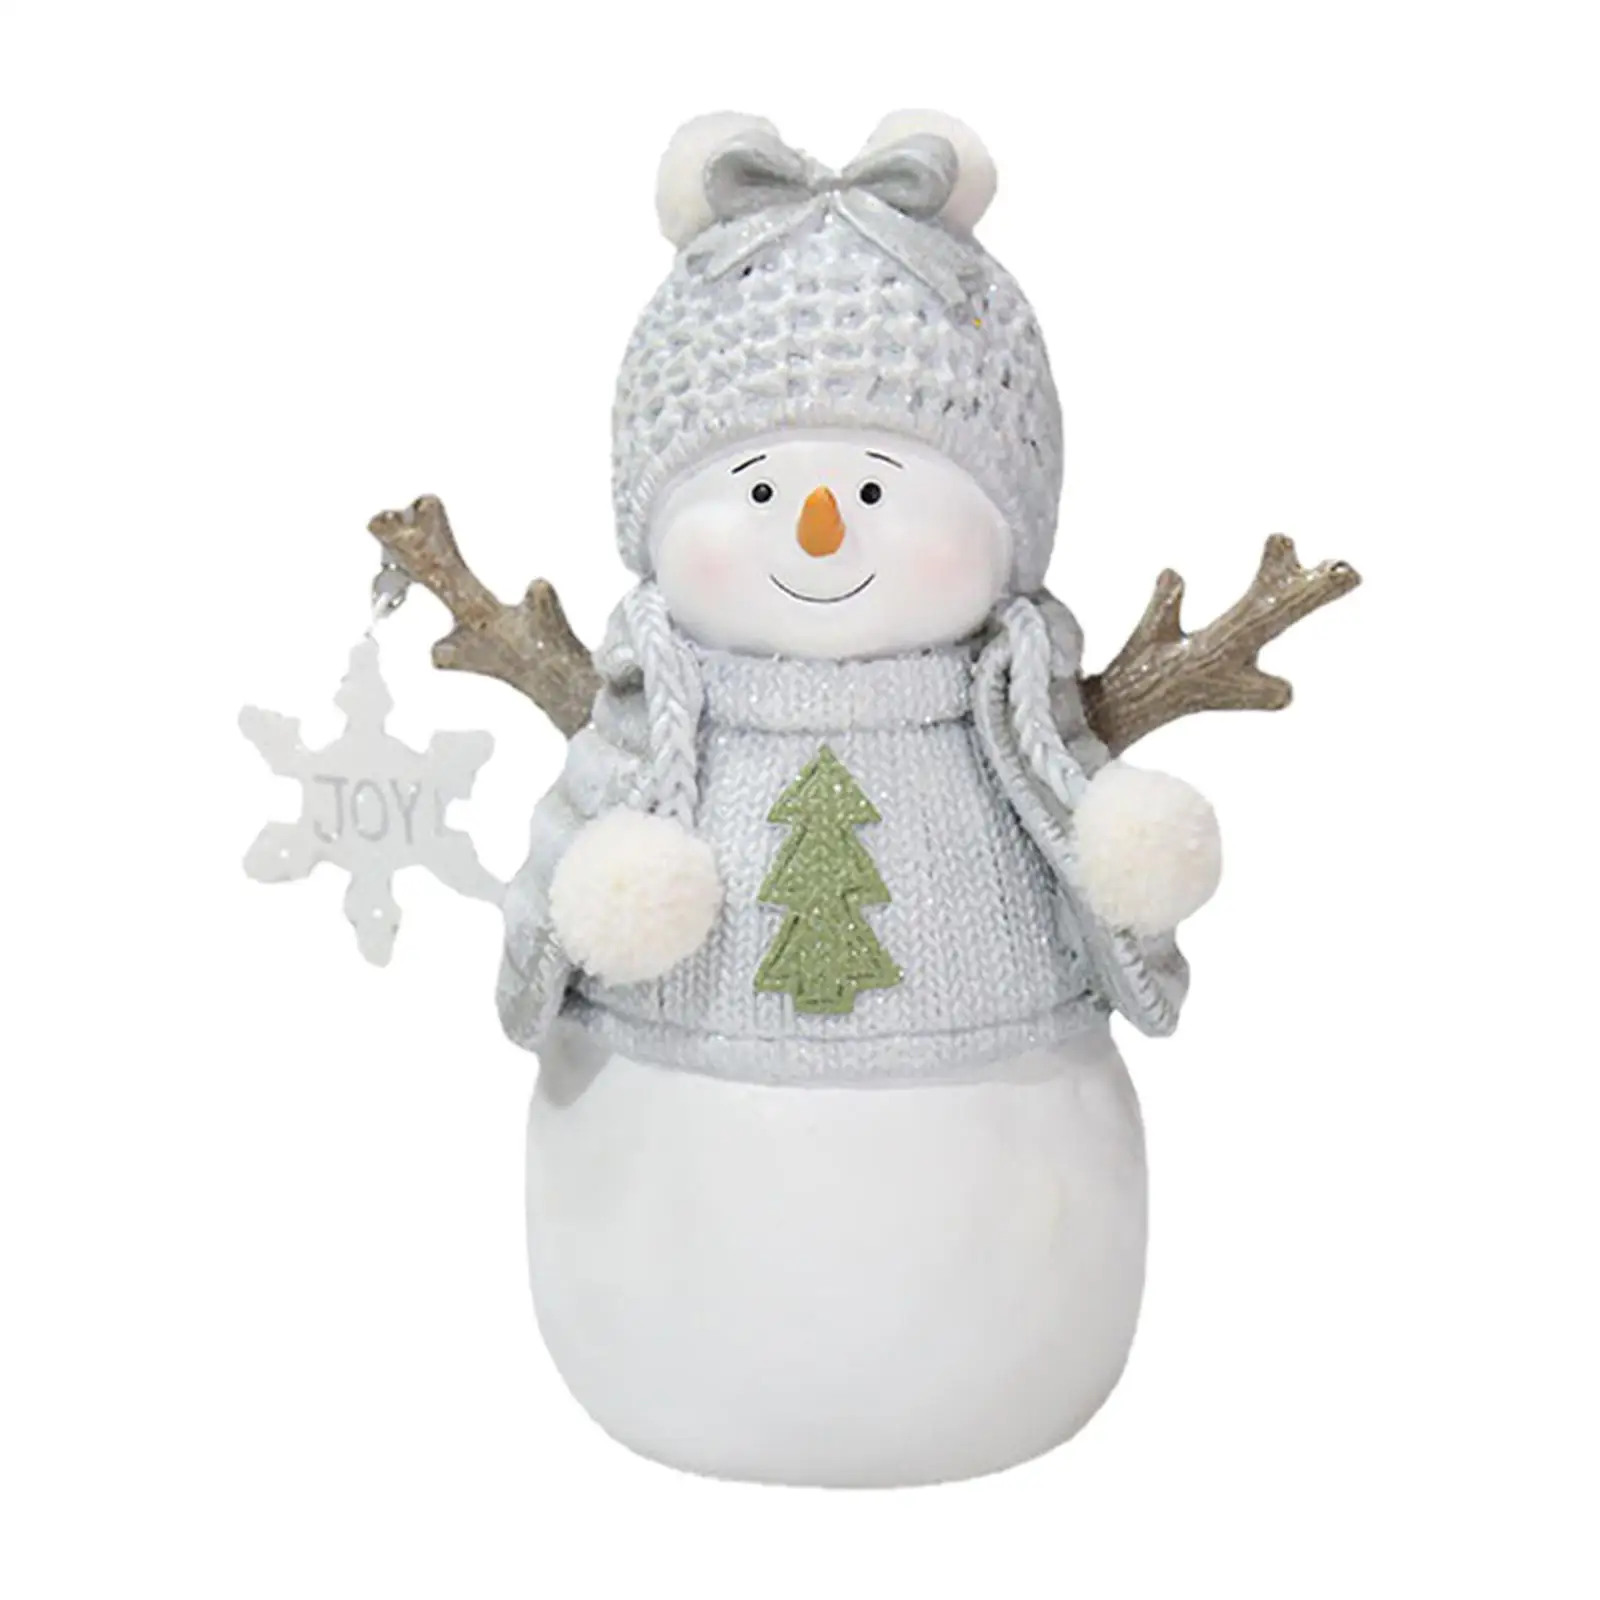 Christmas Snowman Ornament Resin Figurine Hand Painted Cute Xmas Miniature Photo Prop Desktop Sculpture for New Year Decor